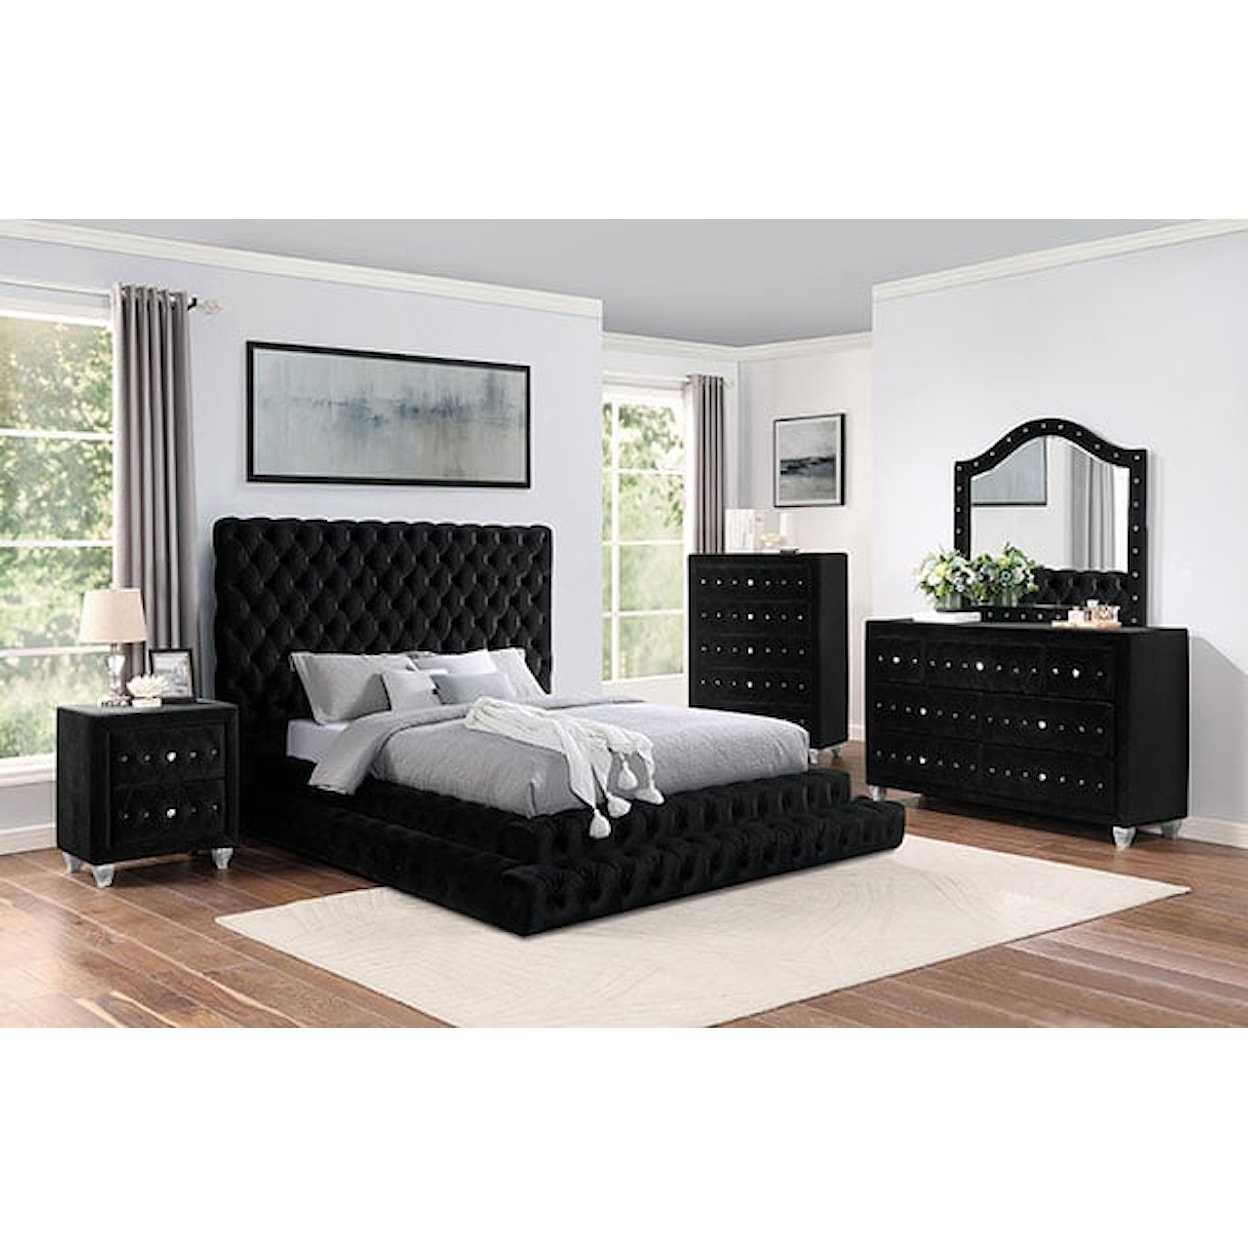 Furniture of America Stefania King Low-Profile Bed